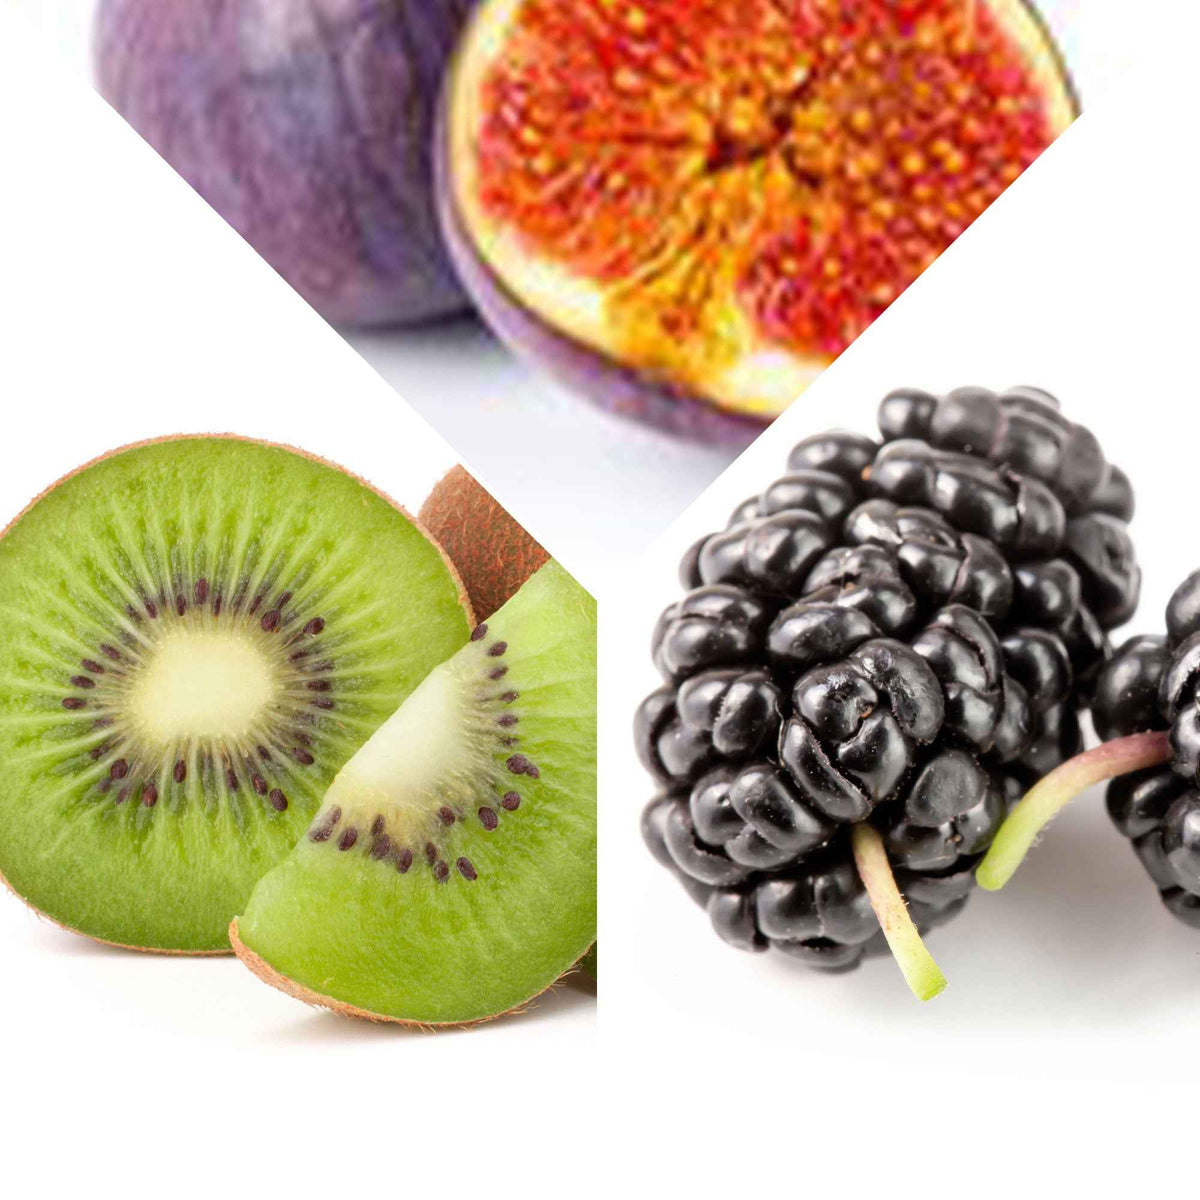 Collection de 3 fruitiers d'été : Figuier, Mûrier, Kiwi - Morus nigra 'mulle', ficus gustissimo 'perretta', actinidia delciosio - Plantes